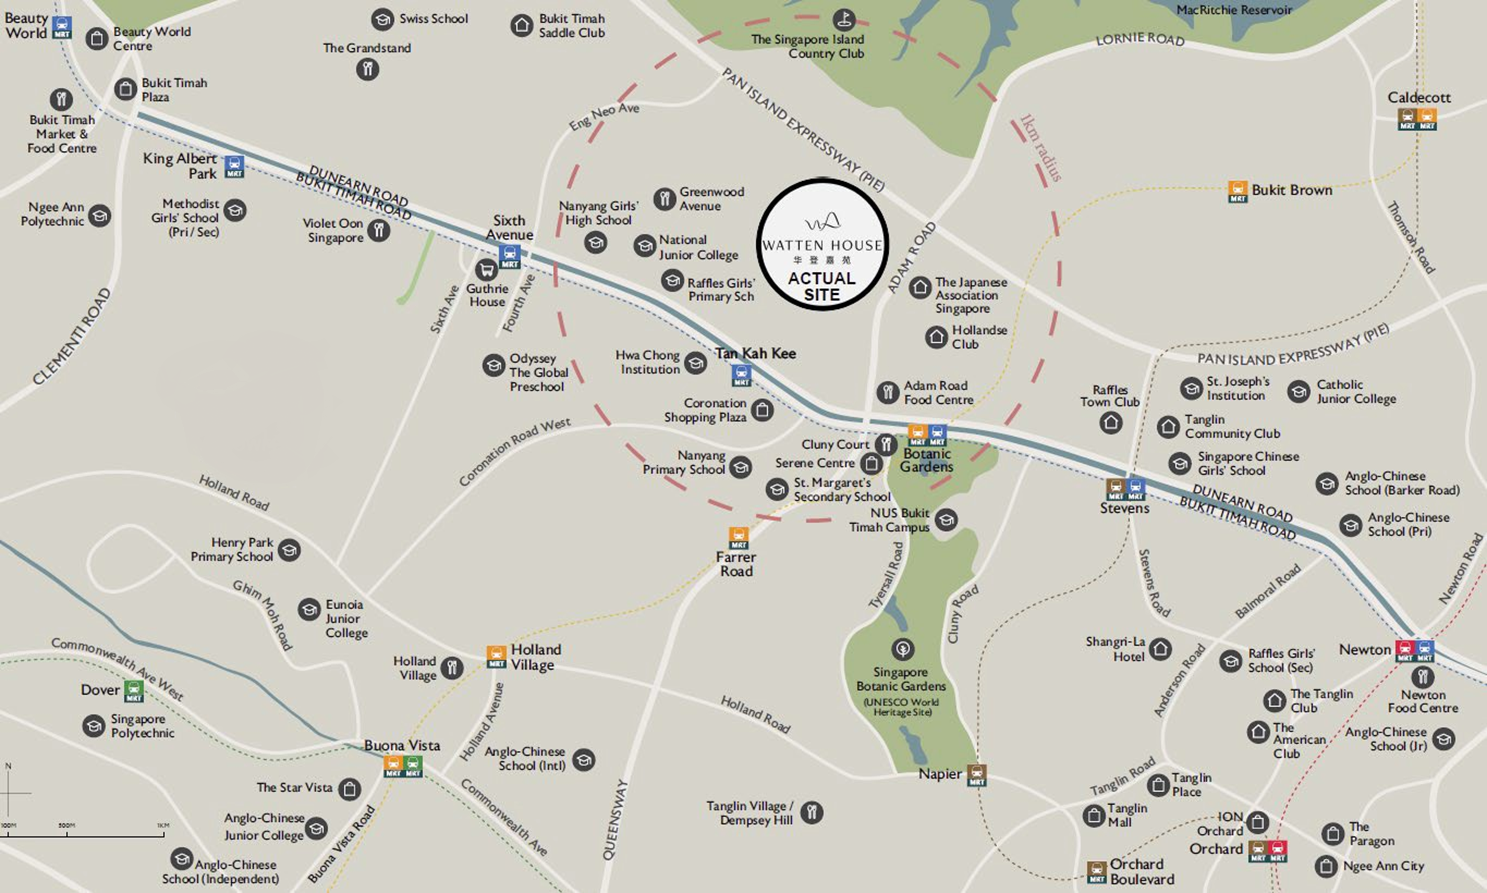 watten-house-location-map-singapore